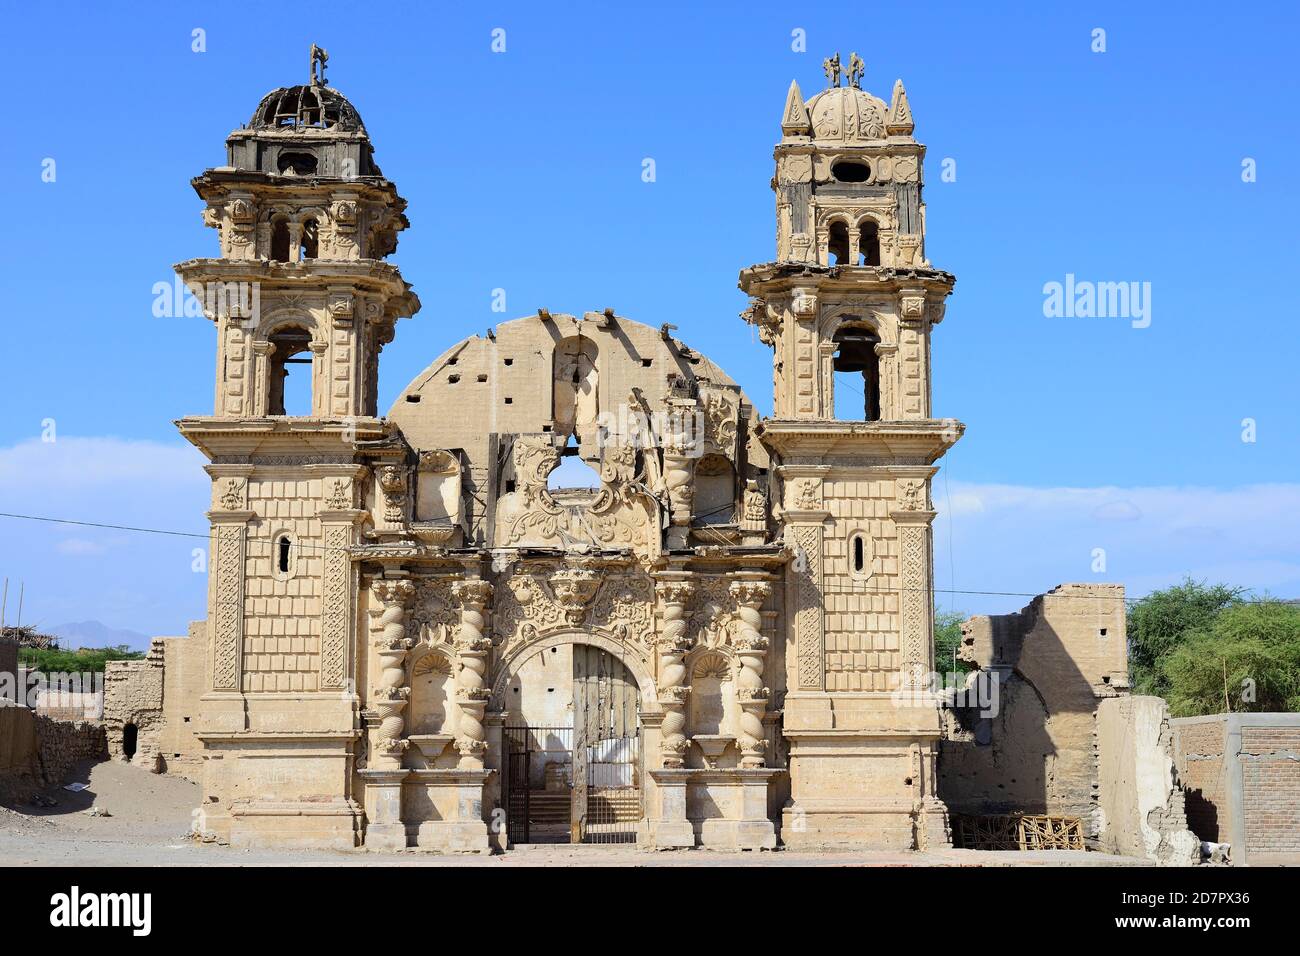 Ruins of the church Iglesia de San Jose de Nasca, near Nasca, Ica region, Peru Stock Photo